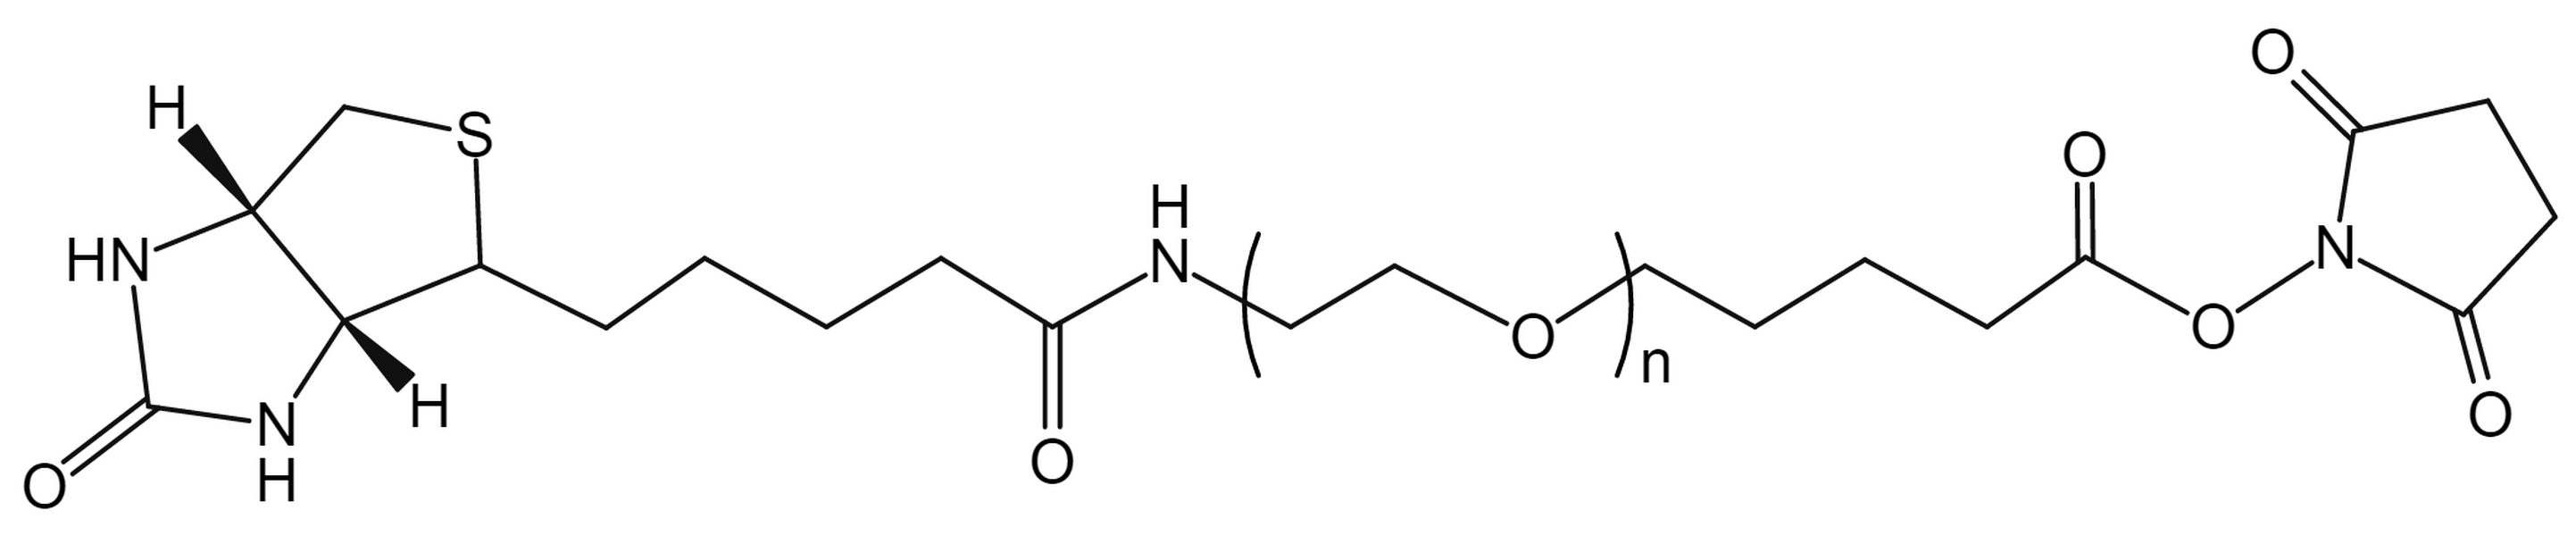 Biotin-PEG-SVA, MW 3.4K